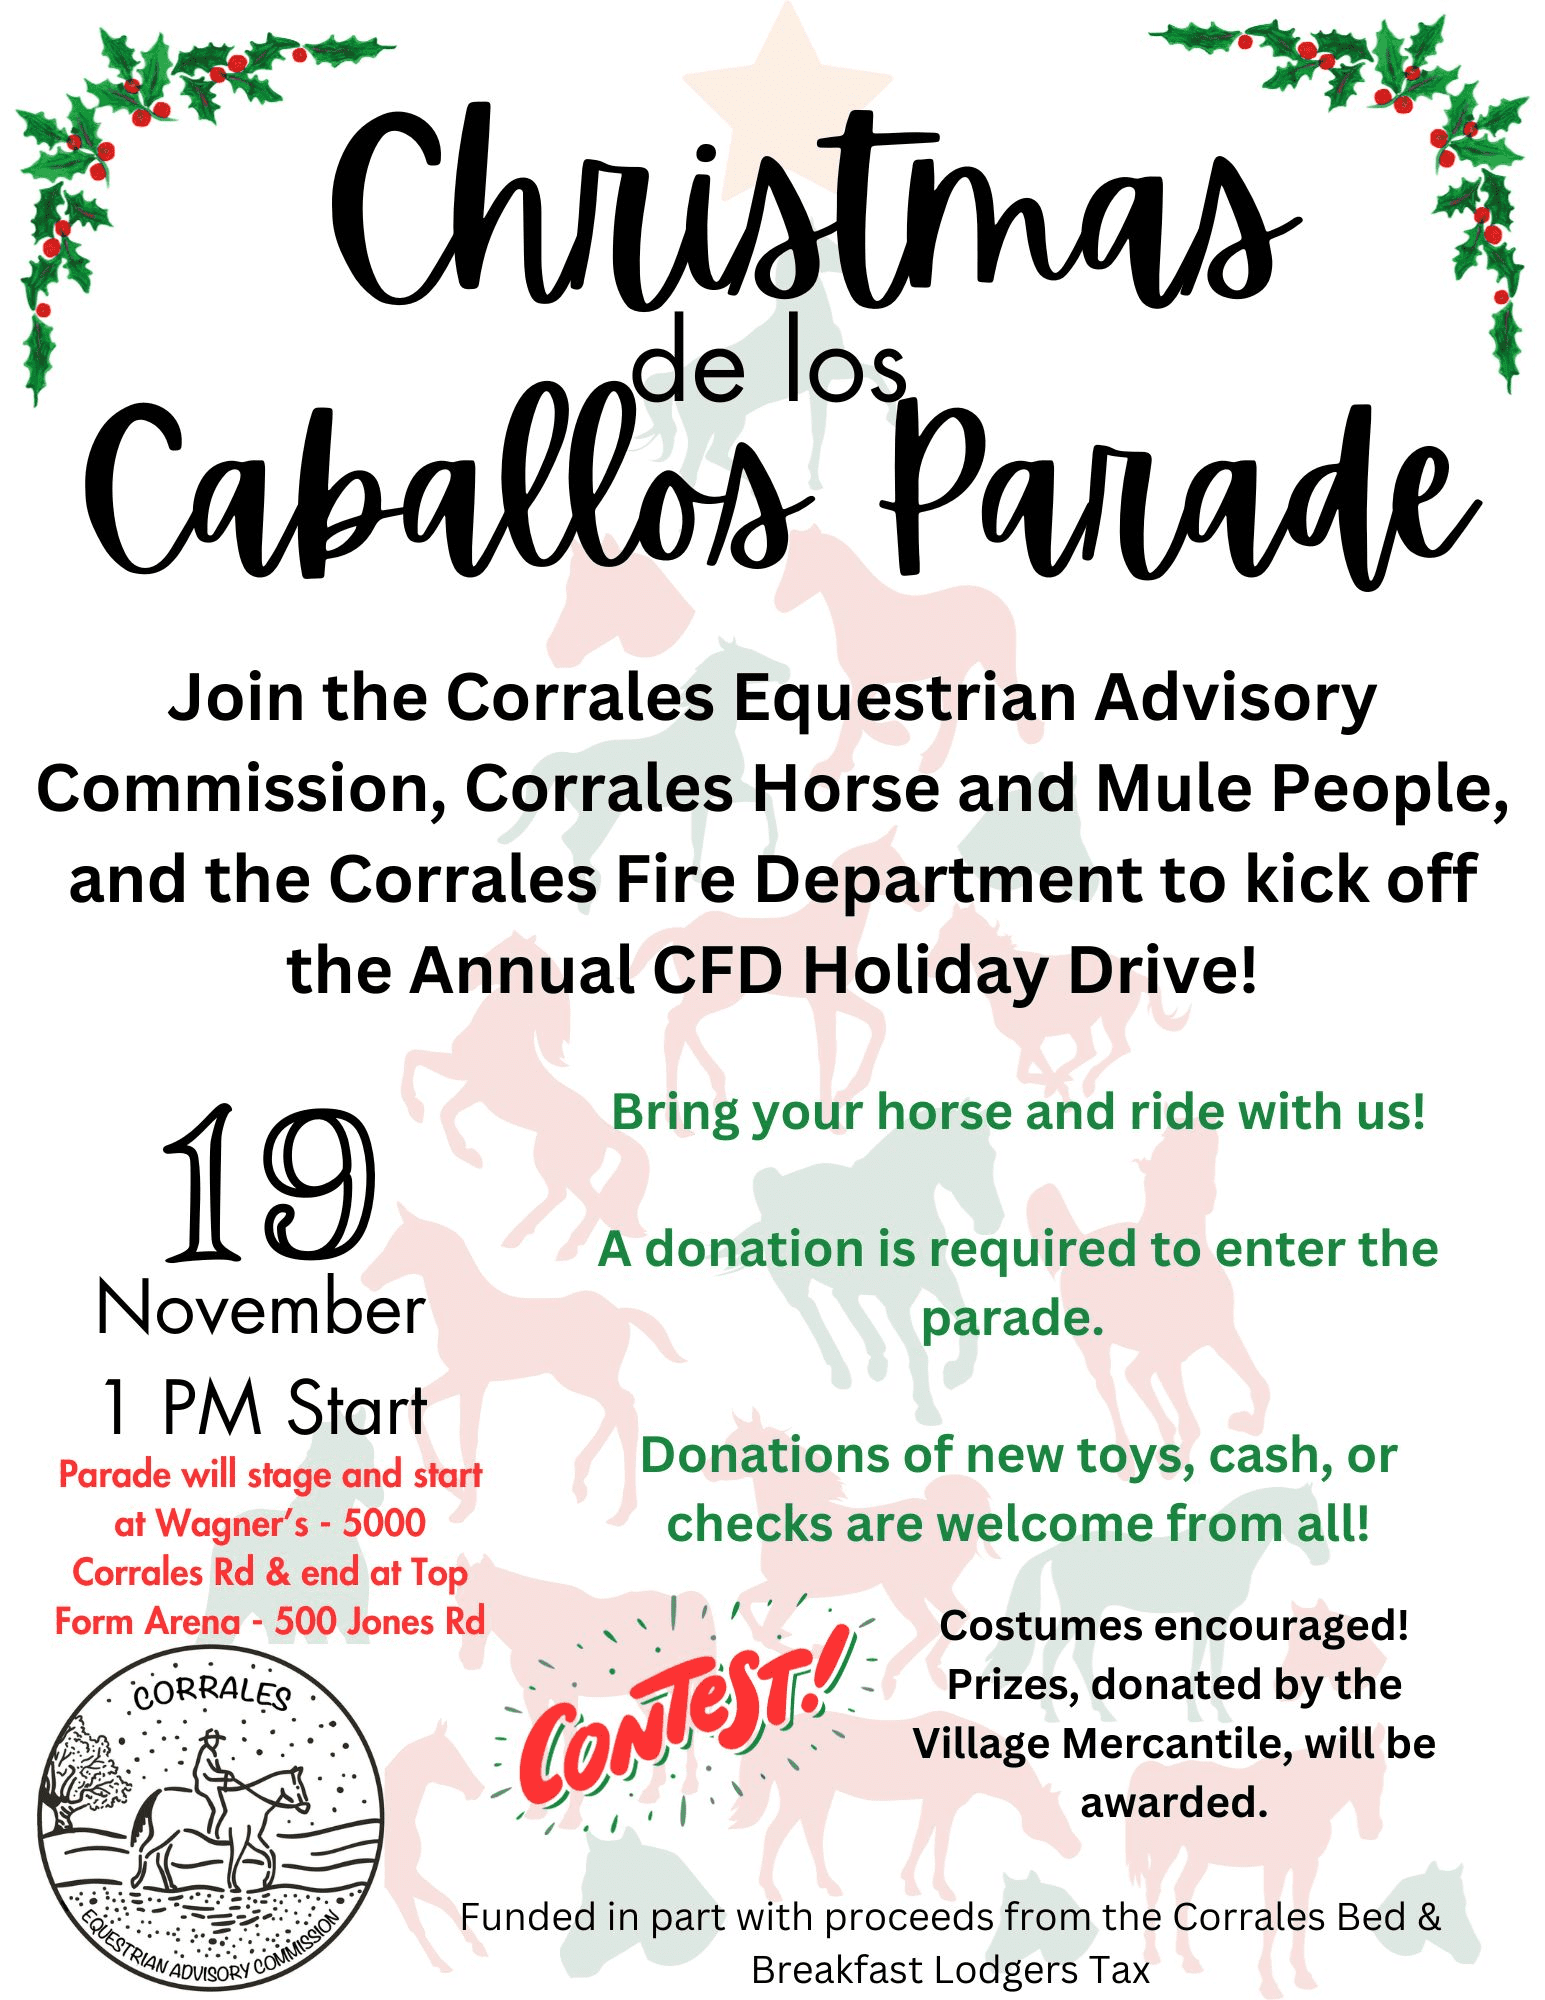 Christmas de los Caballos Parade to kick off Corrales FD holiday drive